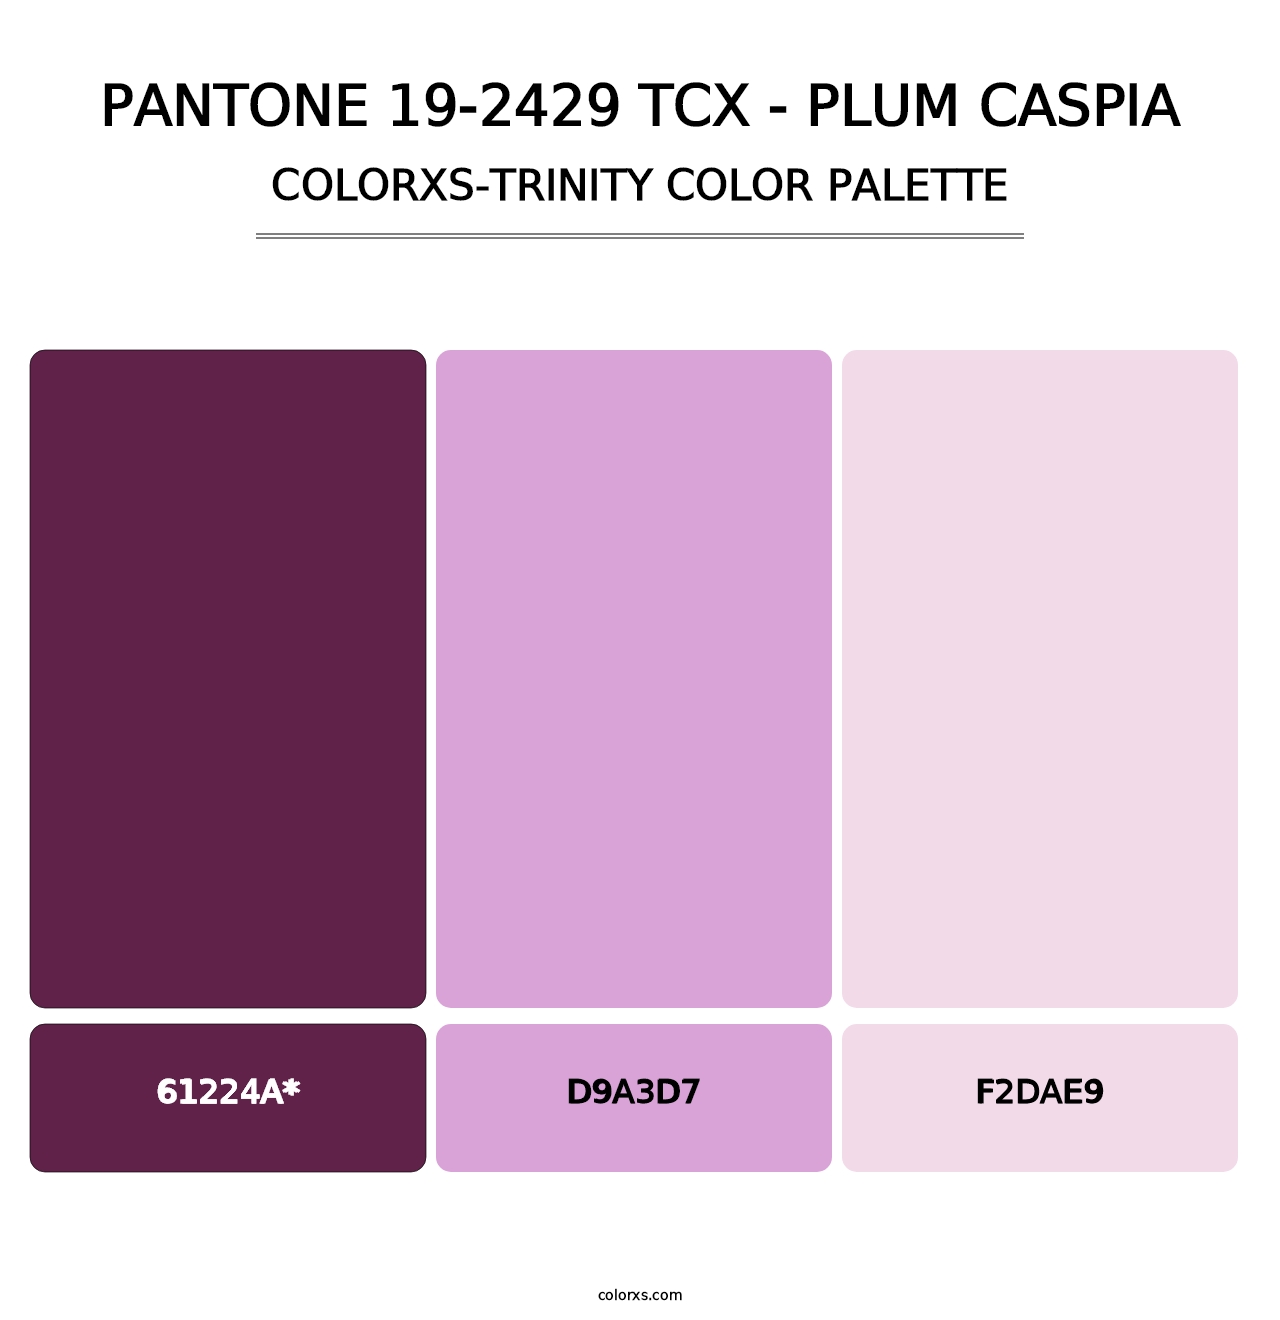 PANTONE 19-2429 TCX - Plum Caspia - Colorxs Trinity Palette